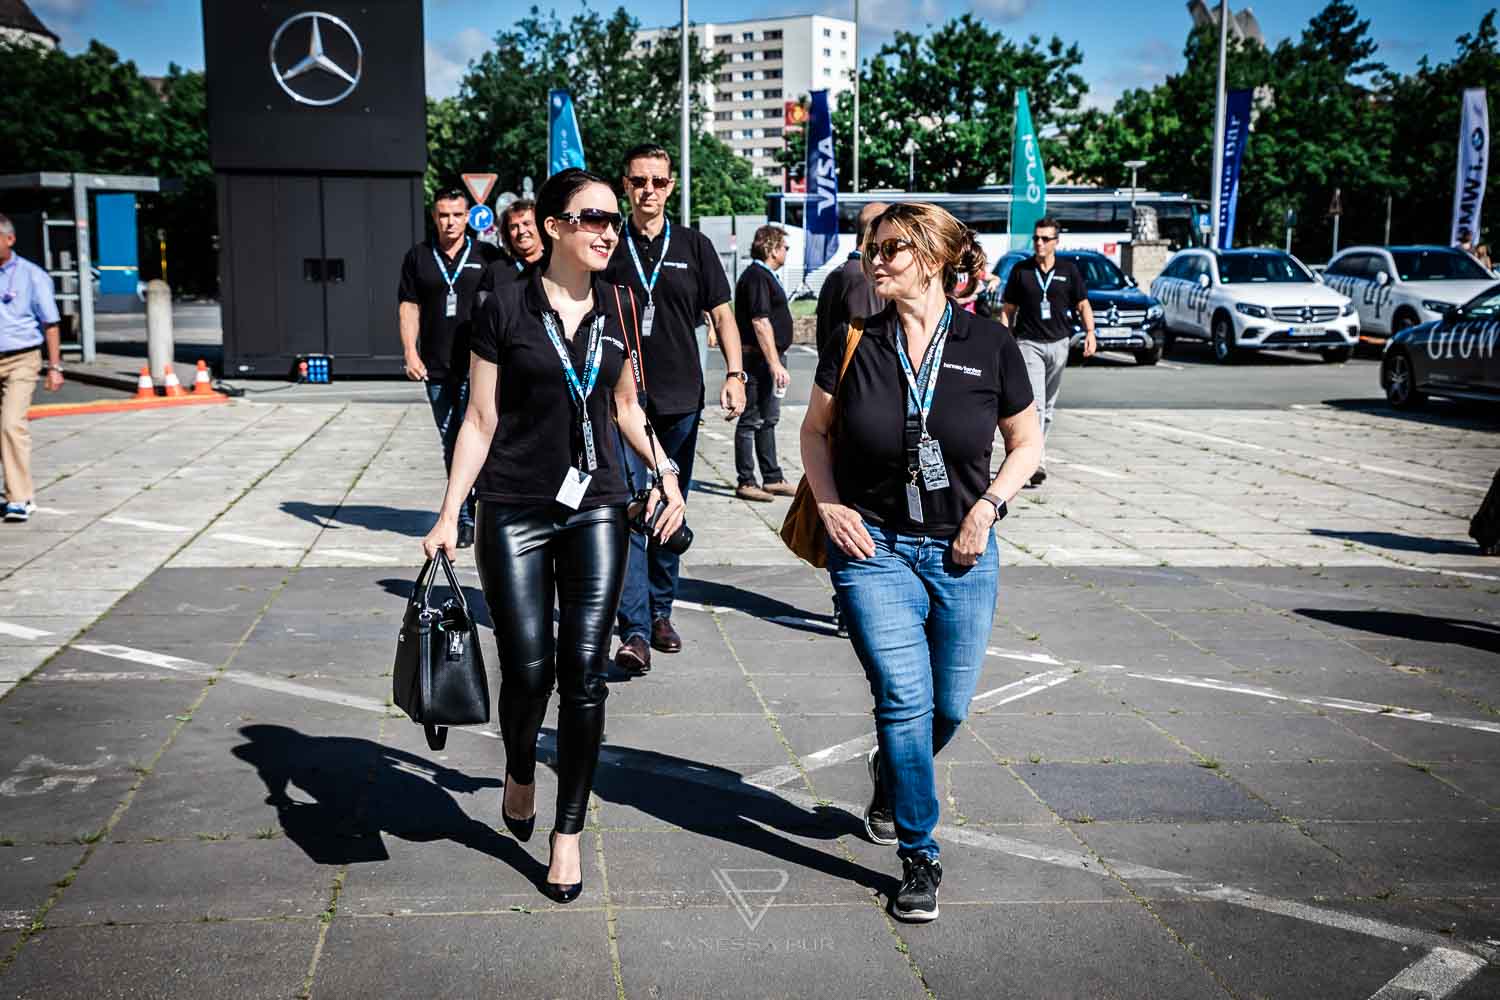 Vanessa Pur at Formula E race motorsport in Berlin - Tempelhof Airport - VIP at MS Amlin Andretti Racing Team - FIA Formula E - Electric Streetracing - Grid Girl - Speed Event Motorsport Event Blogger